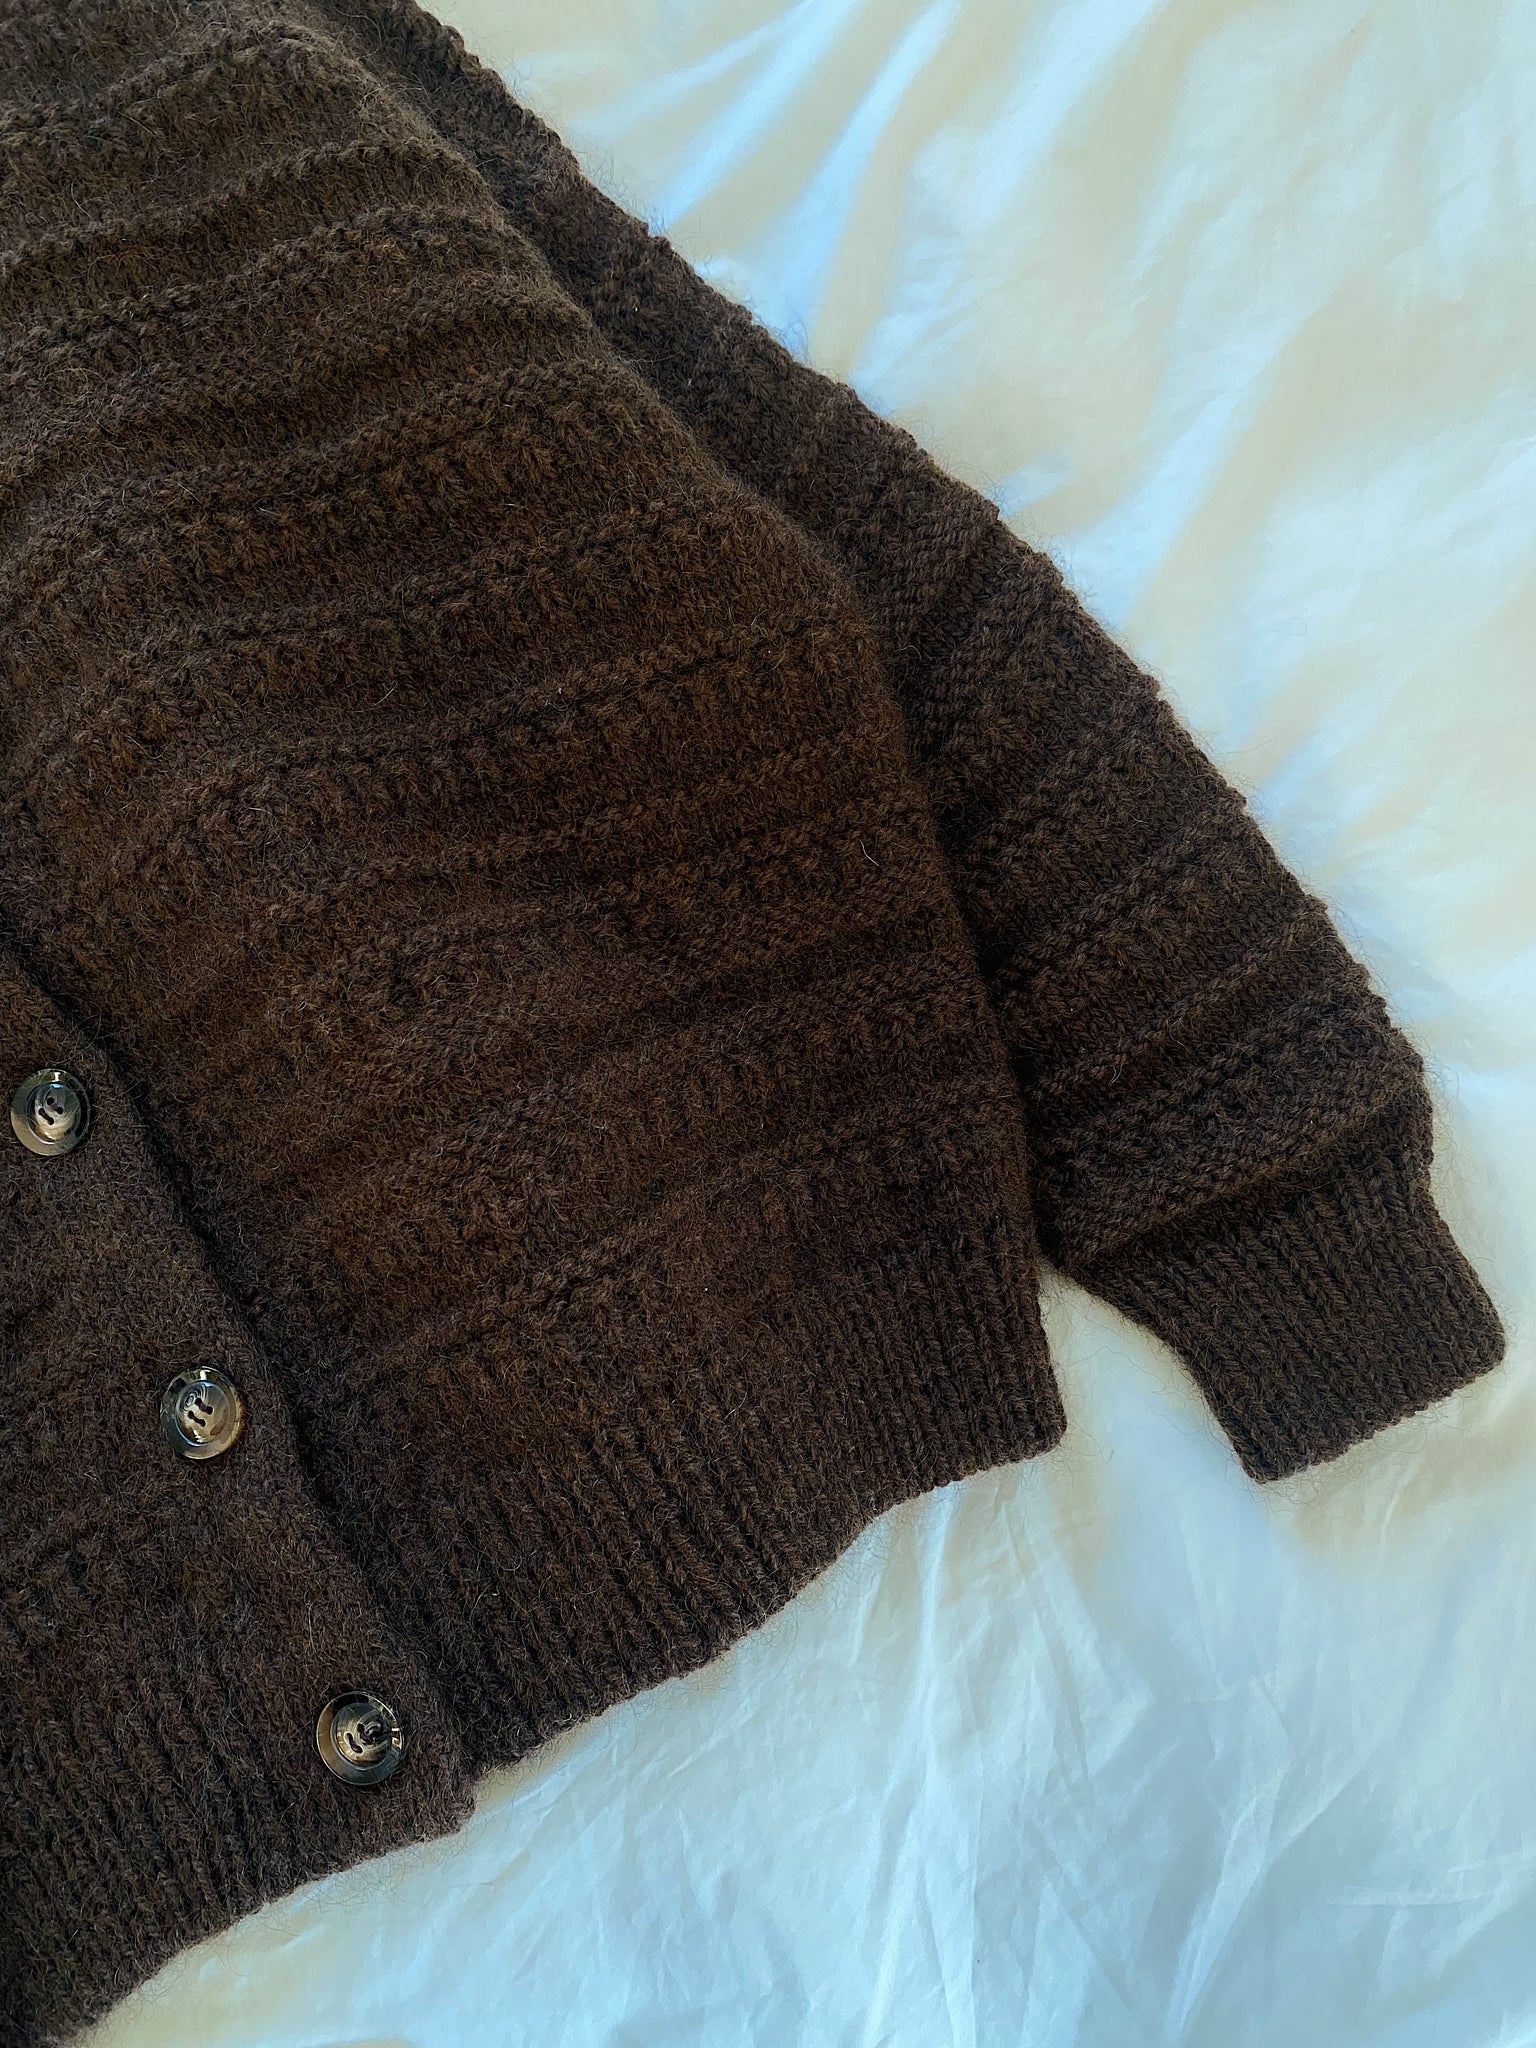 Jacket No. 1 - Knitting Pattern in English – • MY FAVOURITE THINGS •  KNITWEAR